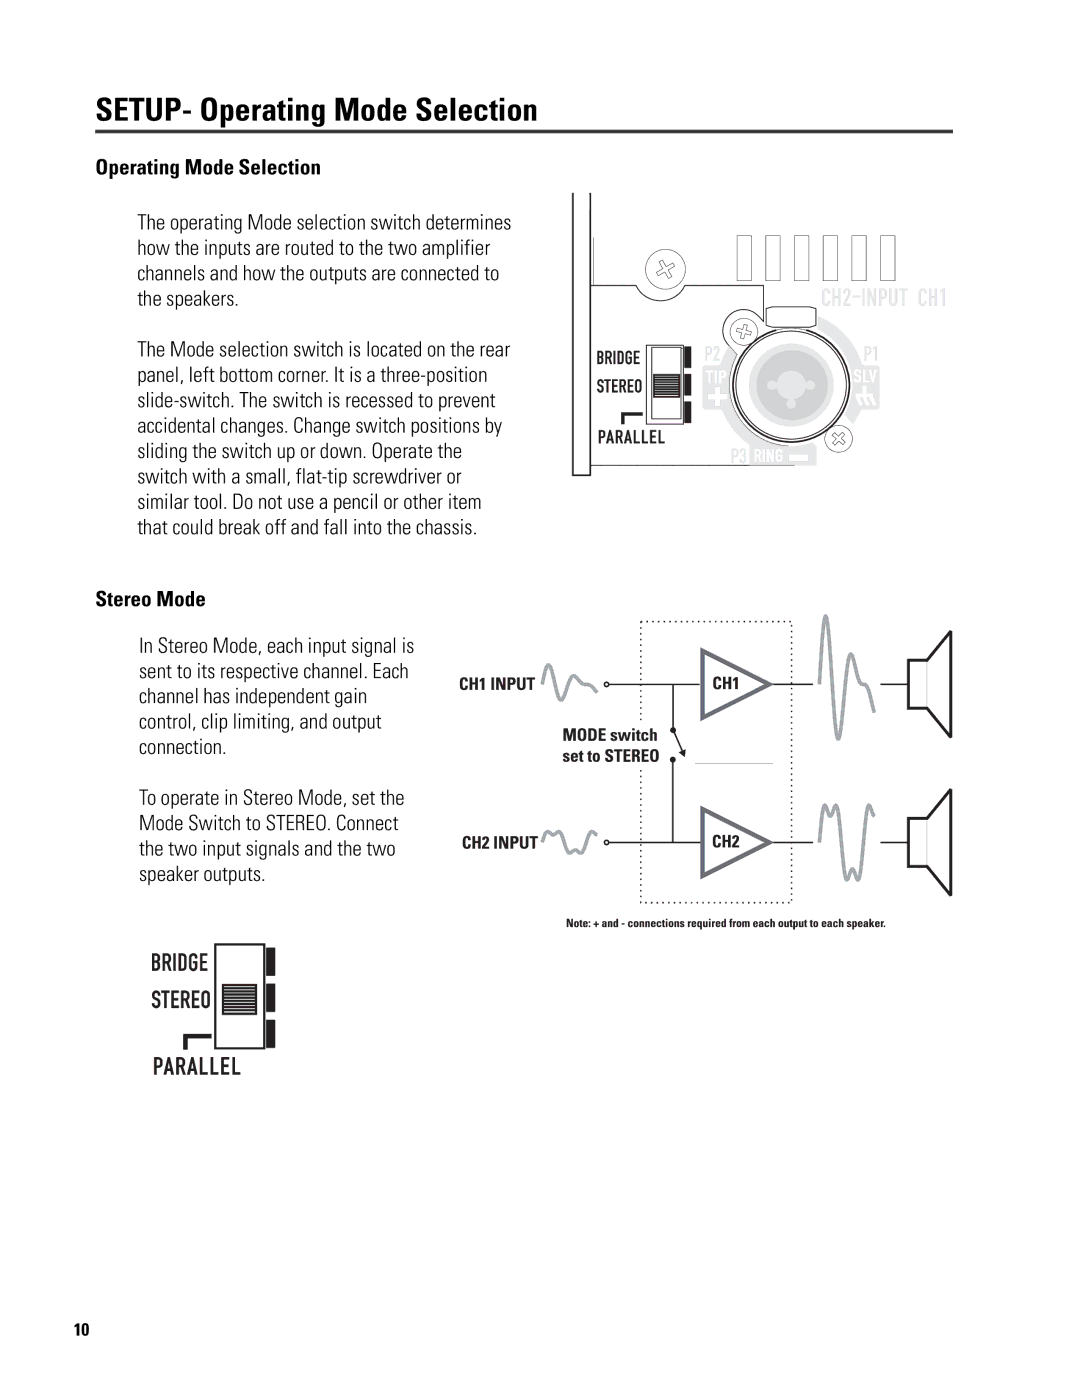 QSC Audio 6.0 II user manual SETUP- Operating Mode Selection, Stereo Mode 